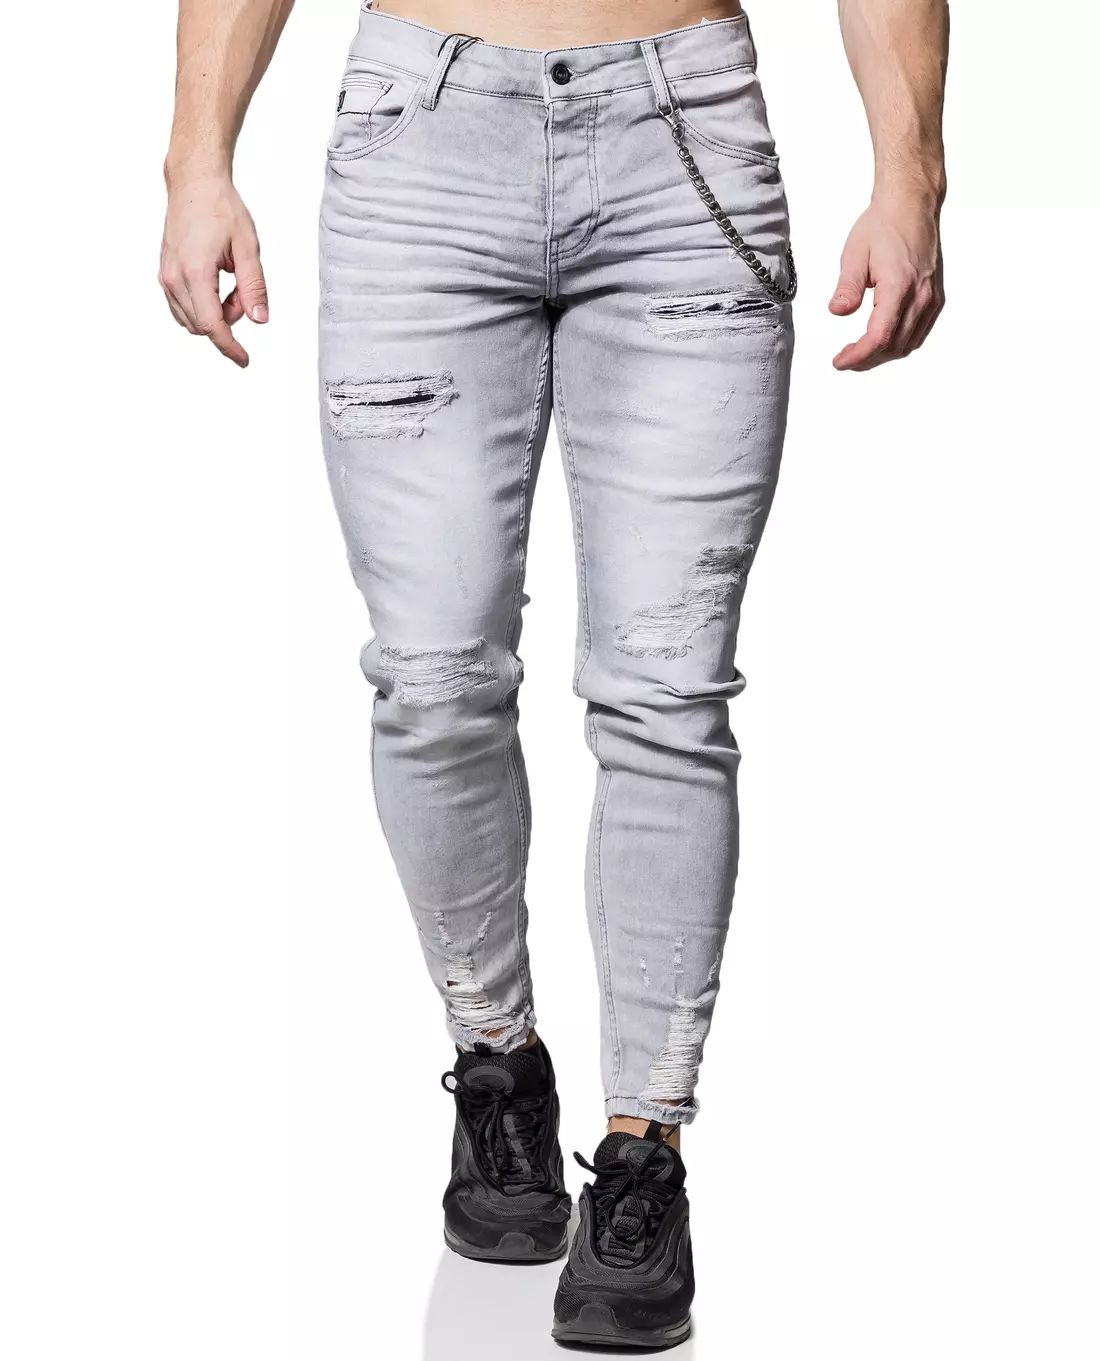 Keyra Gray Jeans L32 Jerone